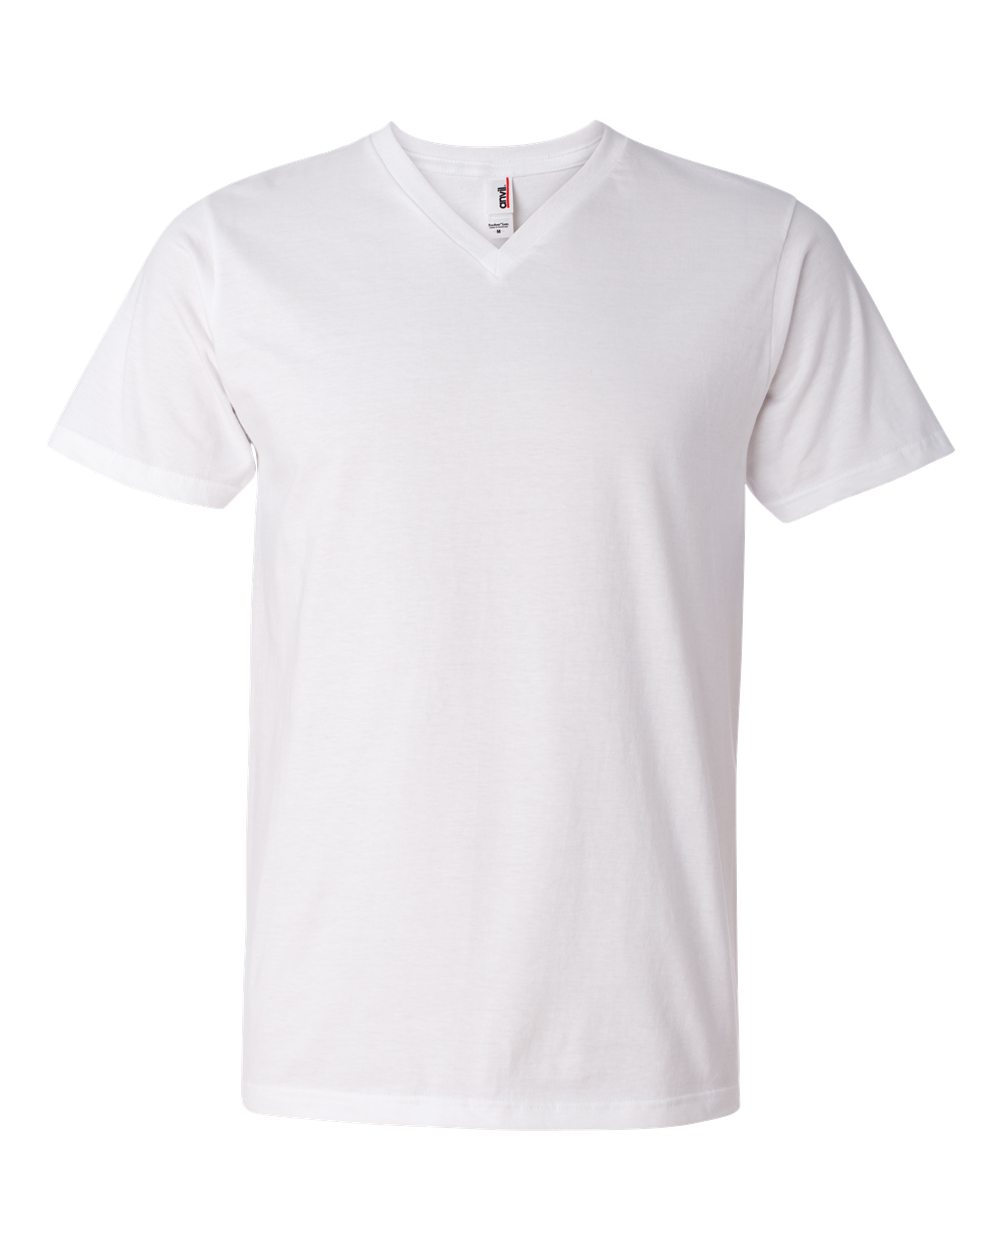 Lightweight V-Neck T-Shirt-Anvil